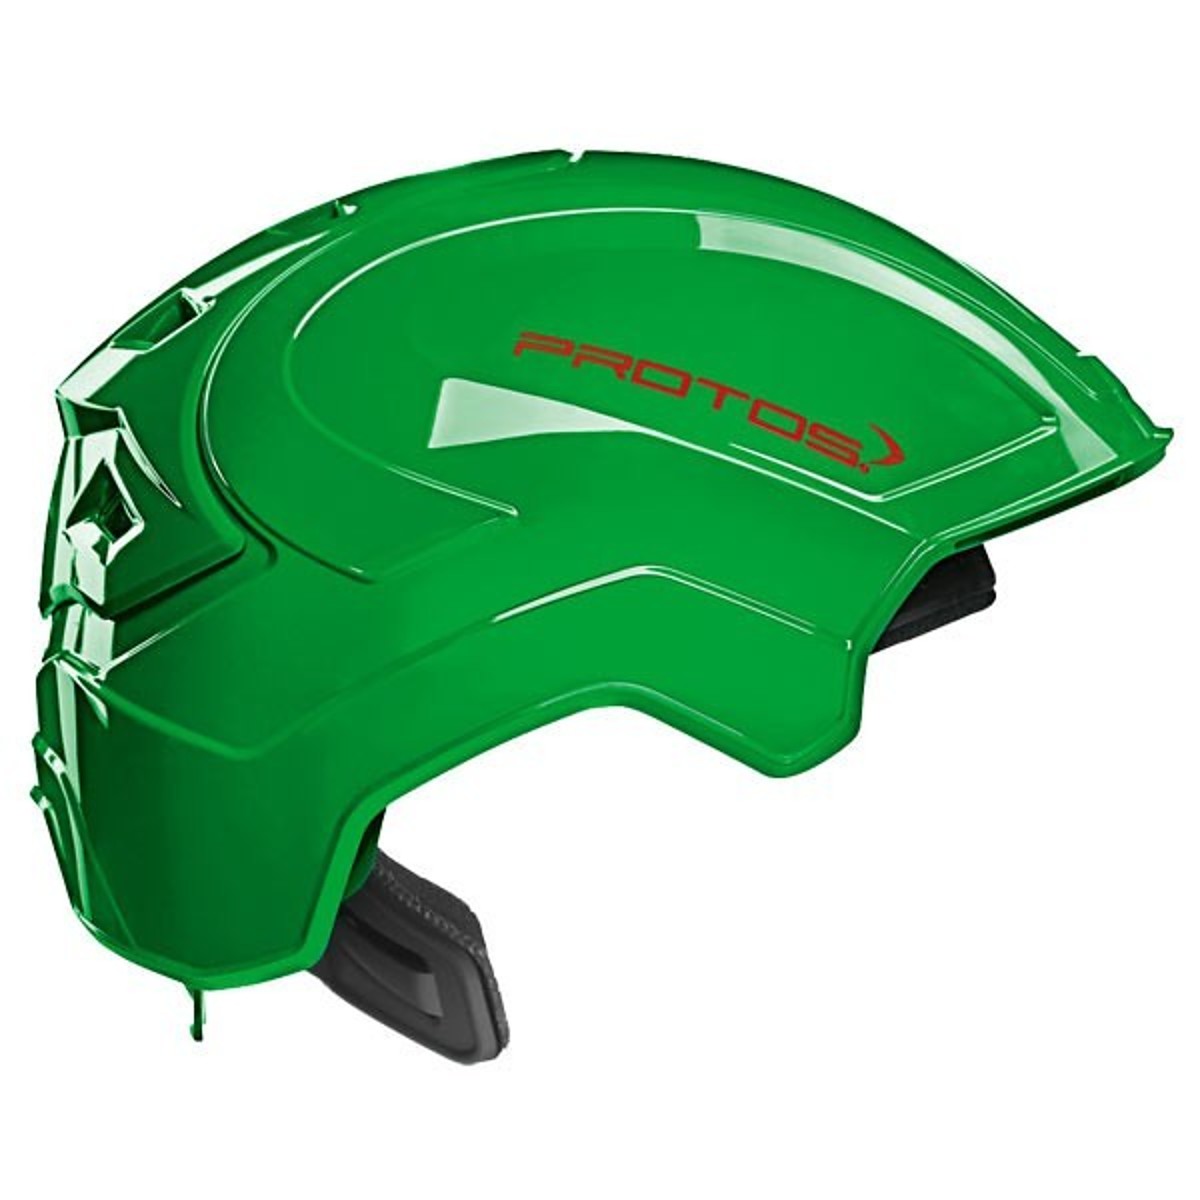 Protos Integral Industry safety helmet